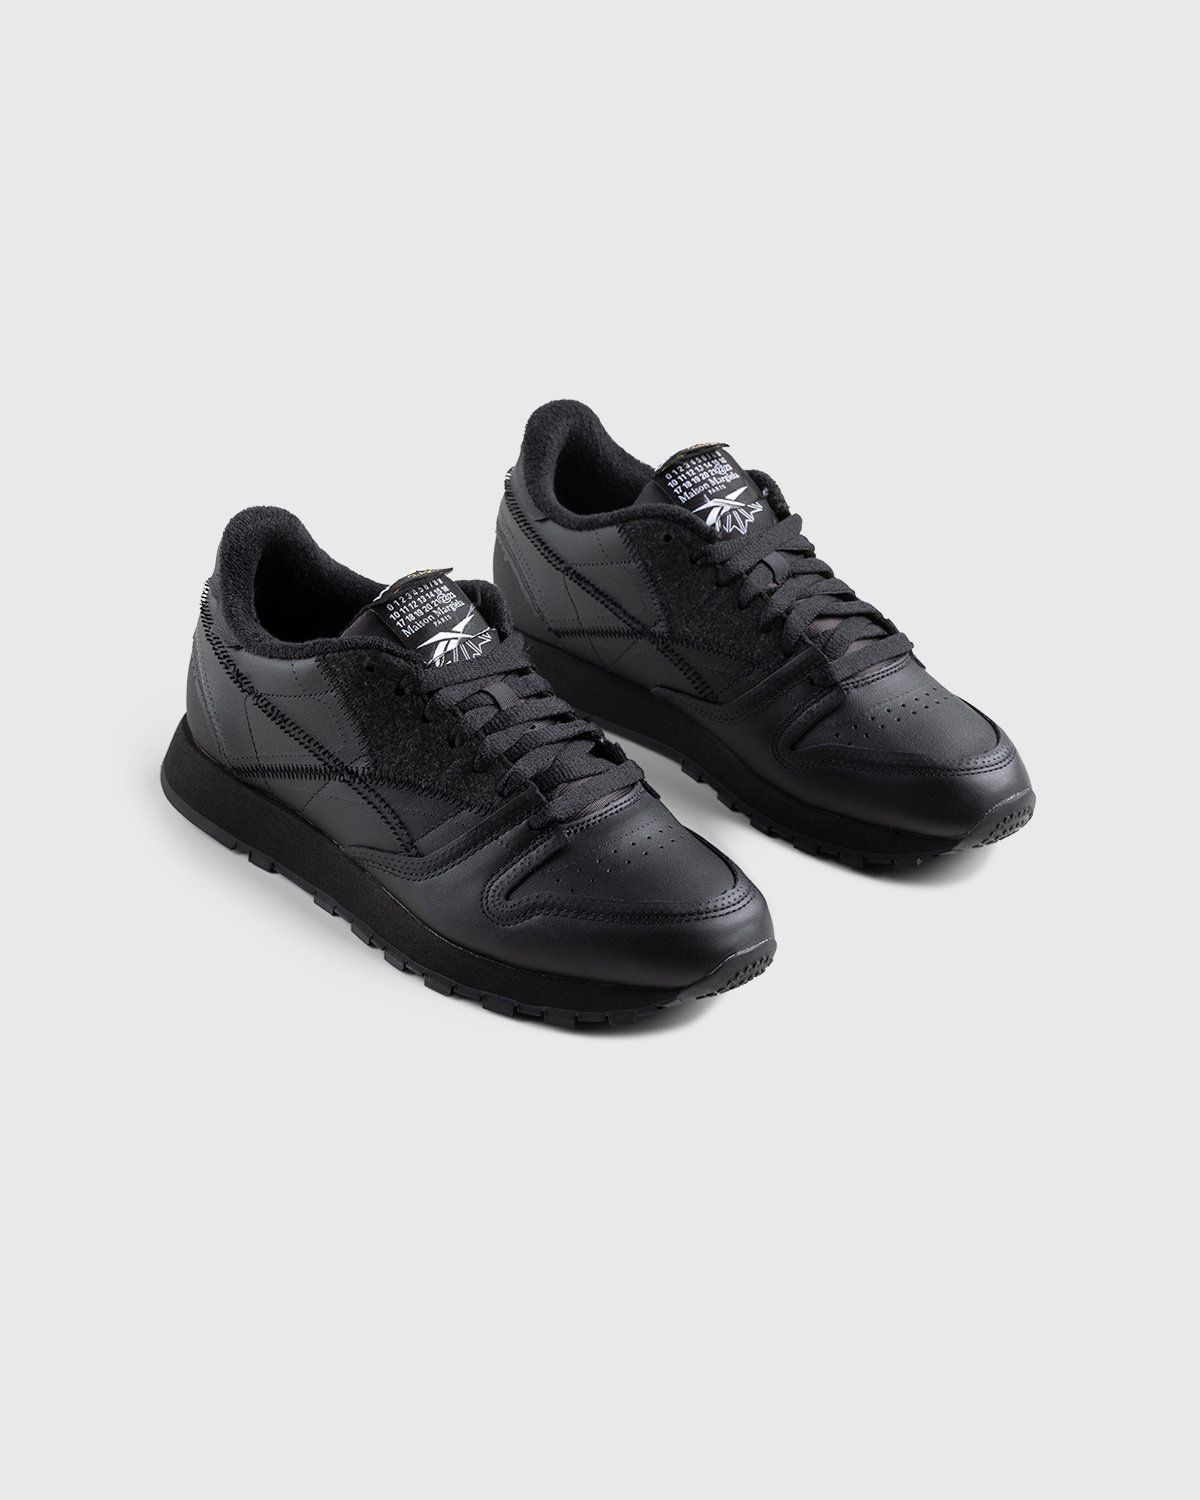 Maison Margiela x Reebok – Classic Leather Memory Of Black/Footwear White/Black - Image 4